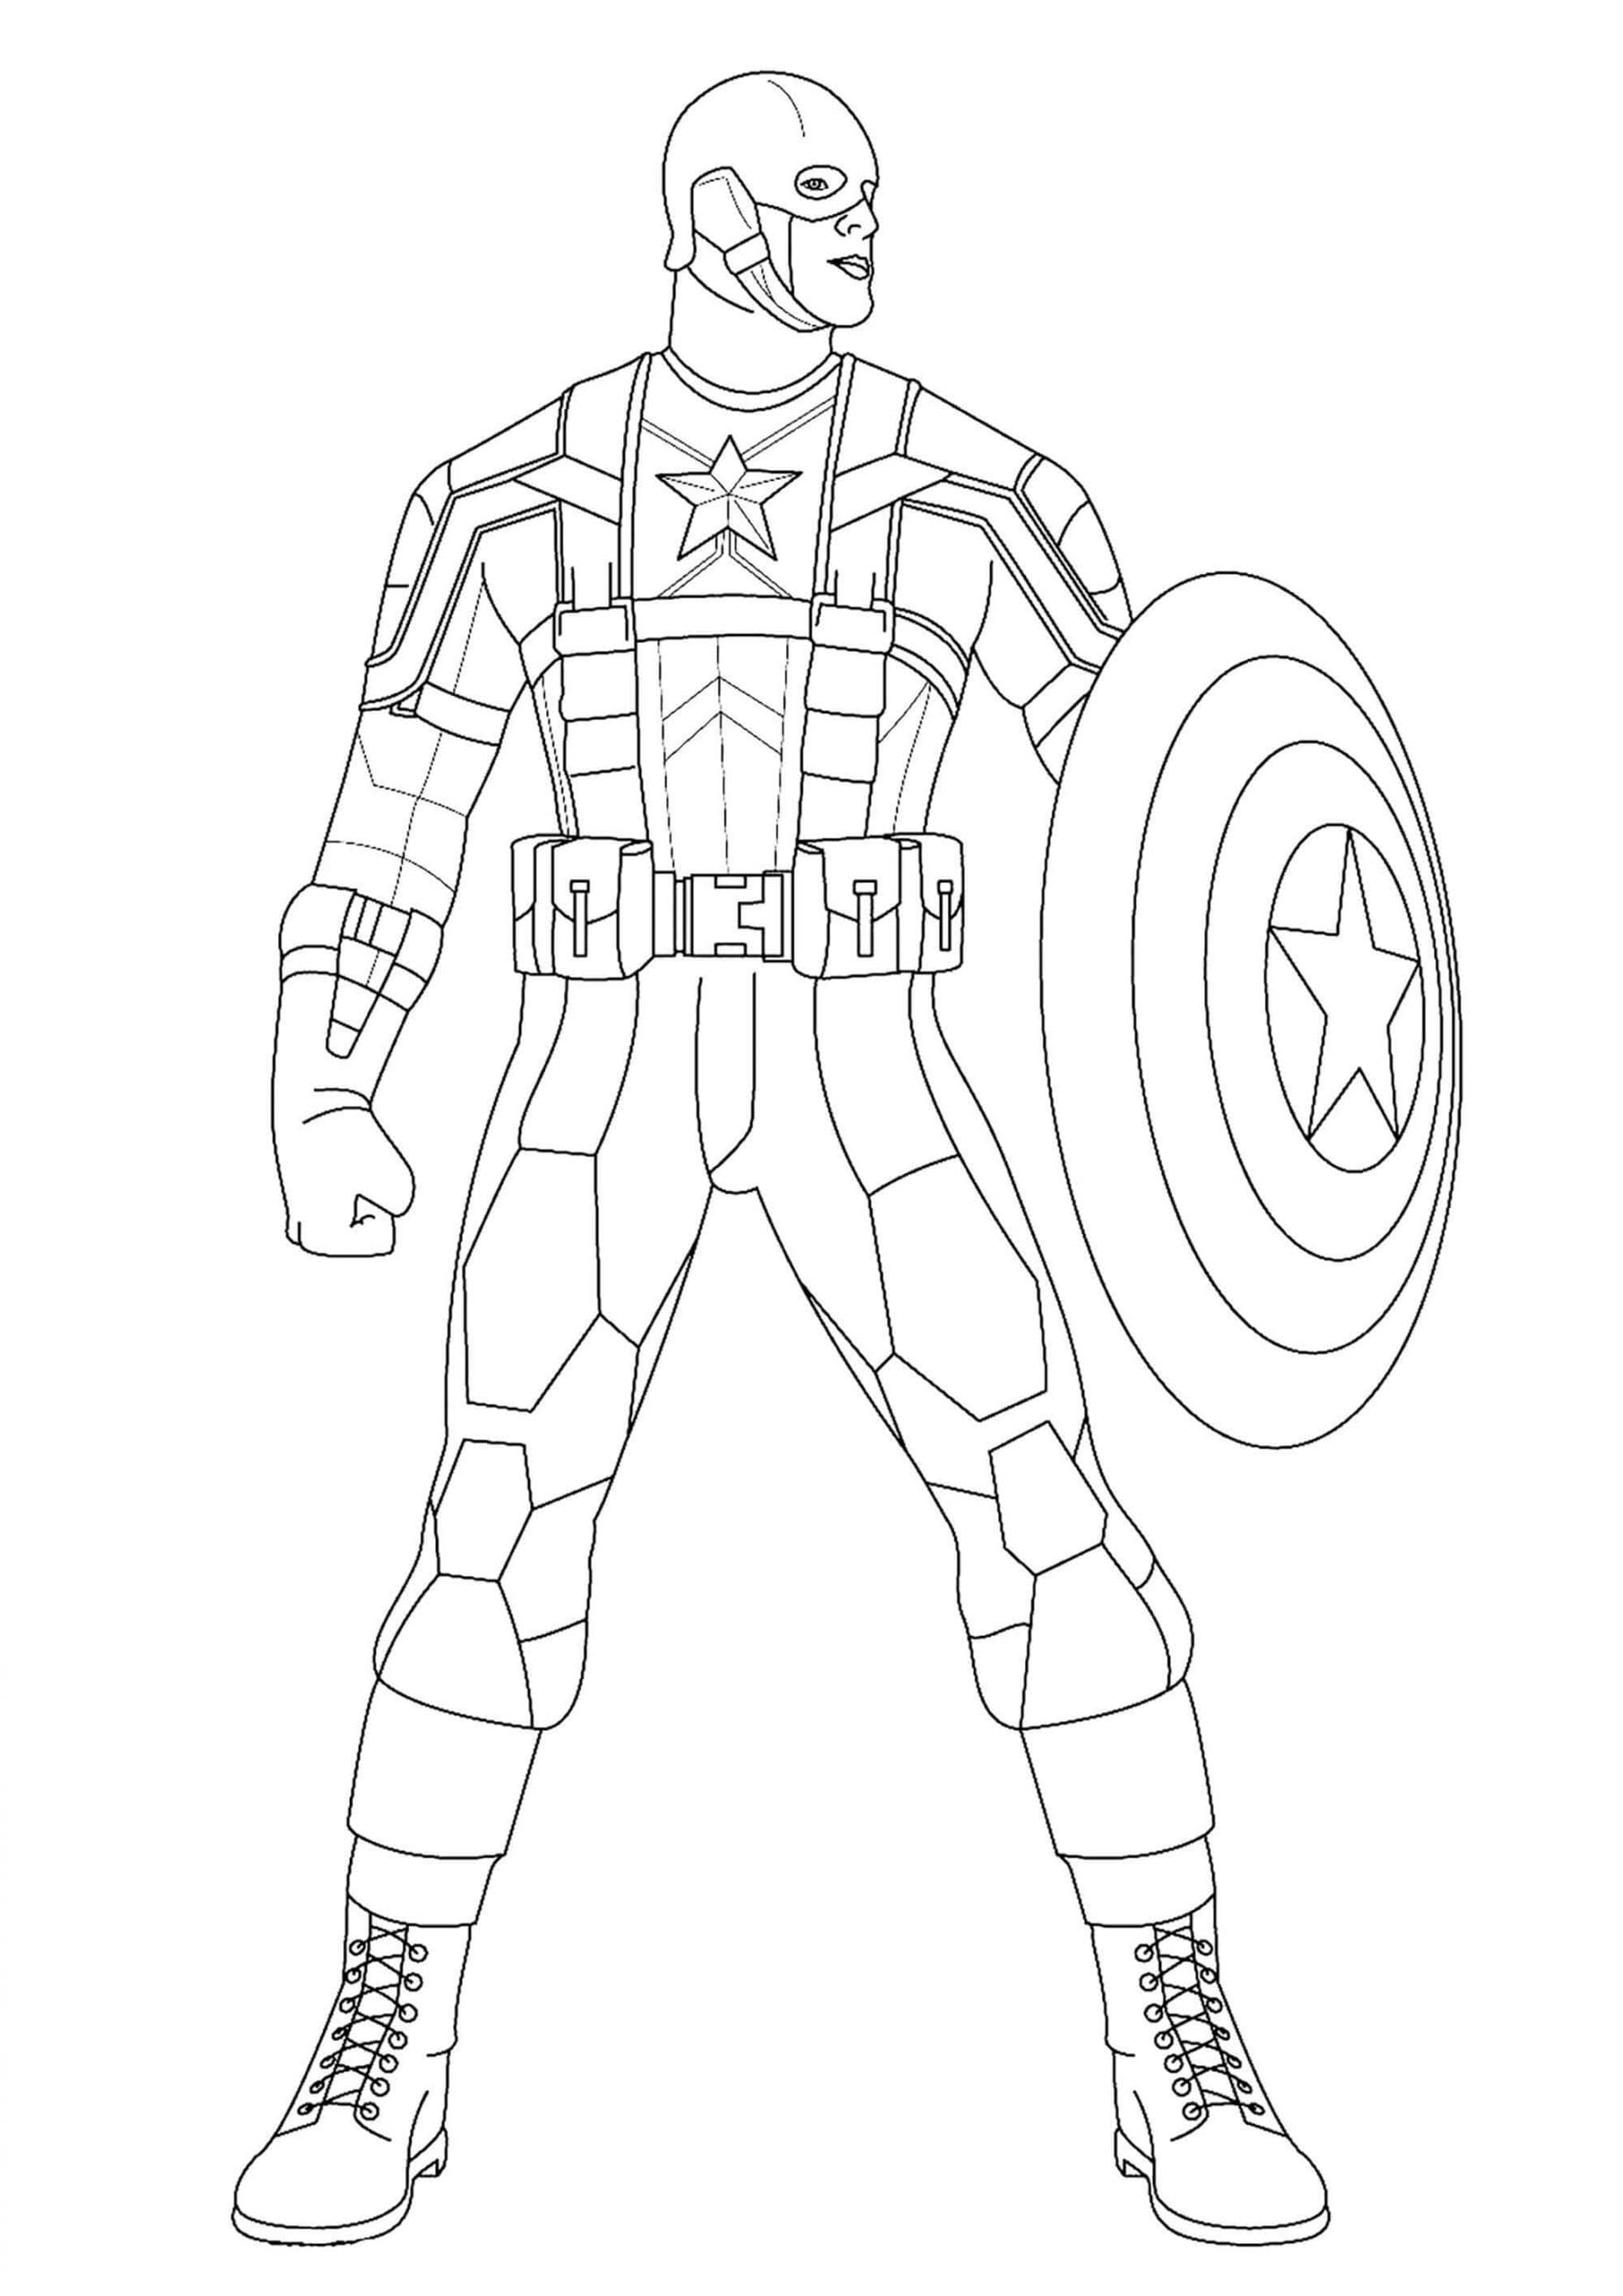 Basis-Captain America